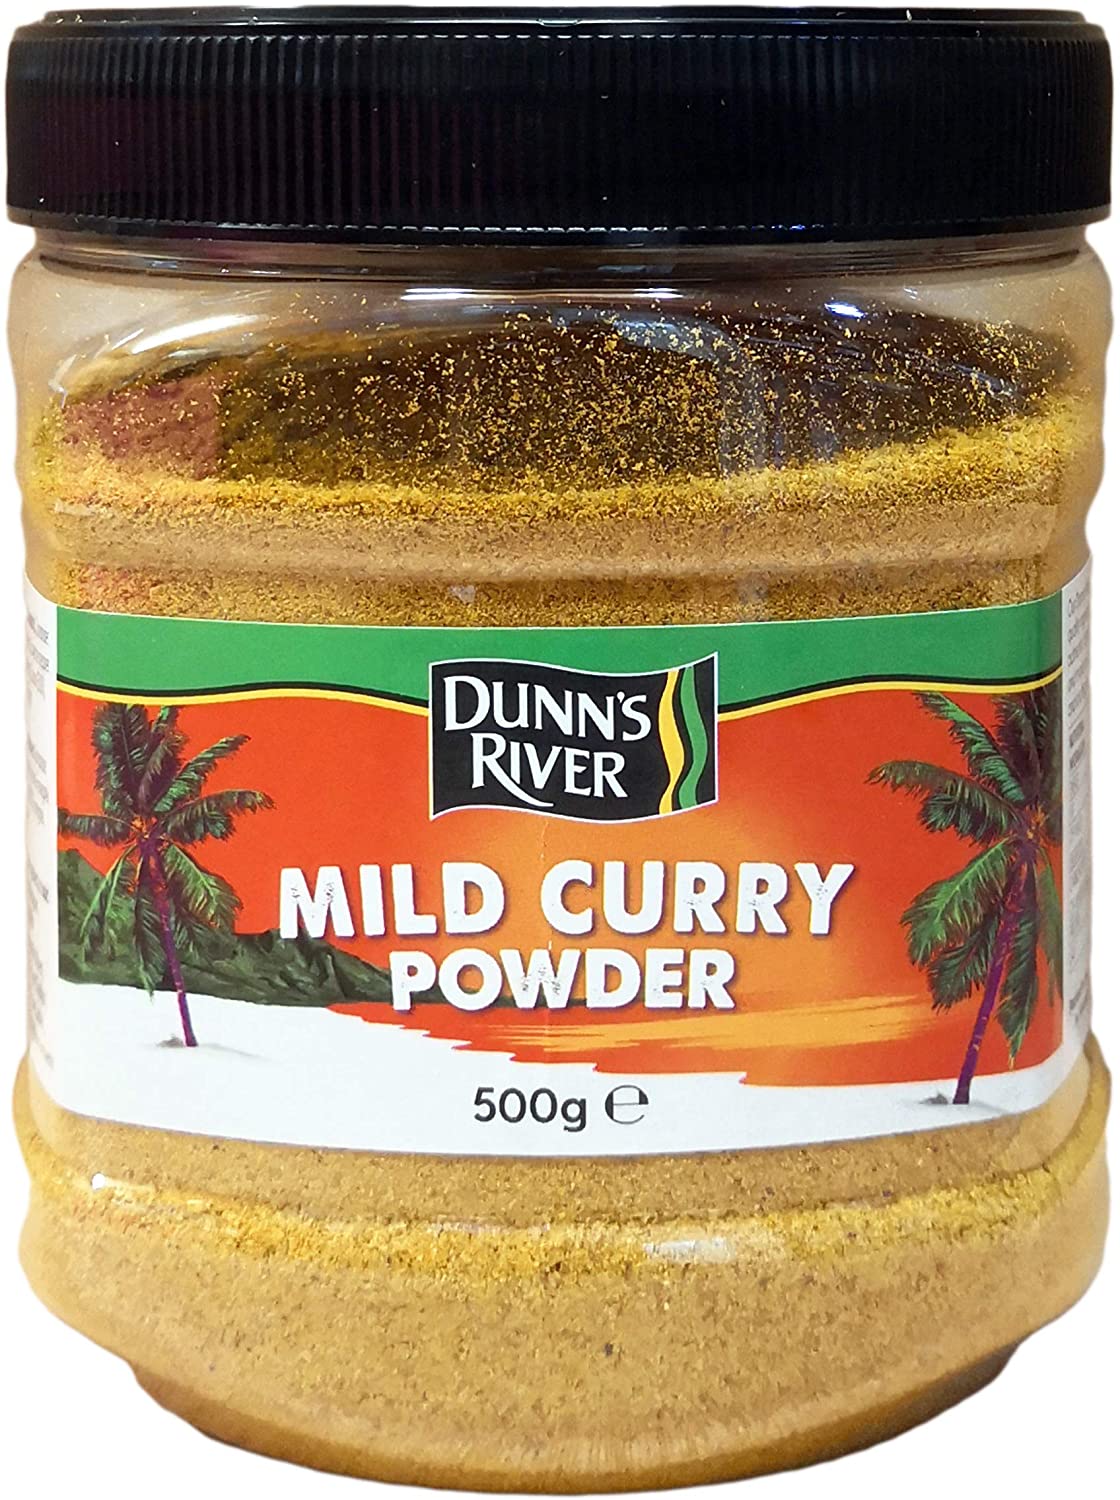 Dunn’s River Mild Curry Powder 500g